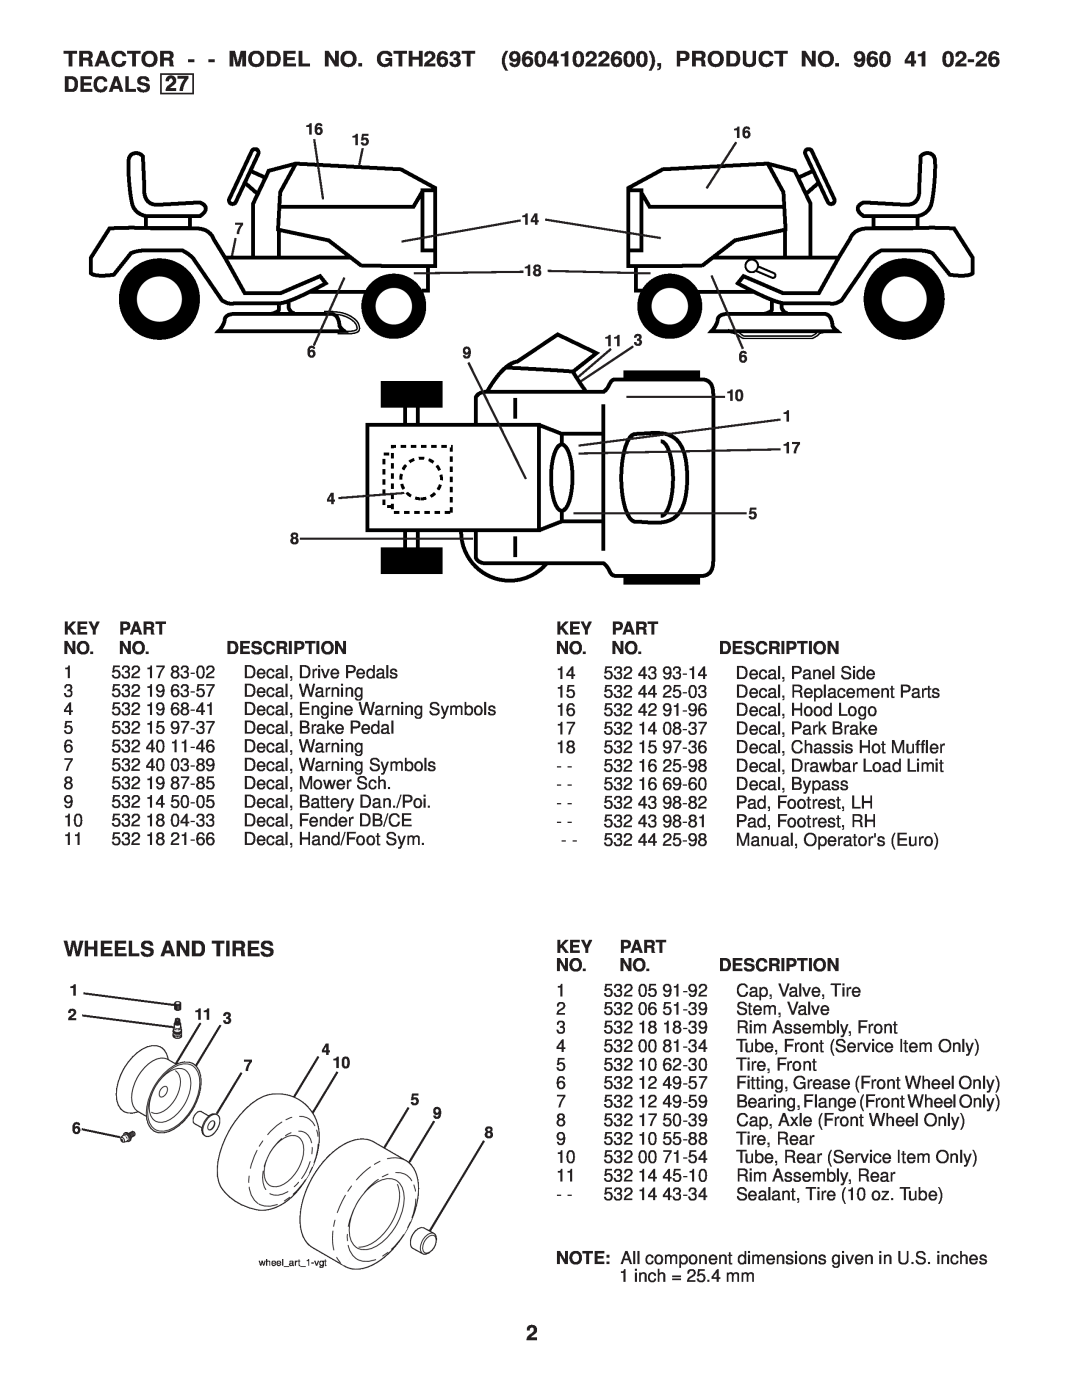 Husqvarna GTH263 T TRACTOR - - MODEL NO. GTH263T DECALS, 96041022600, PRODUCT NO, Wheels And Tires, Part, Description 